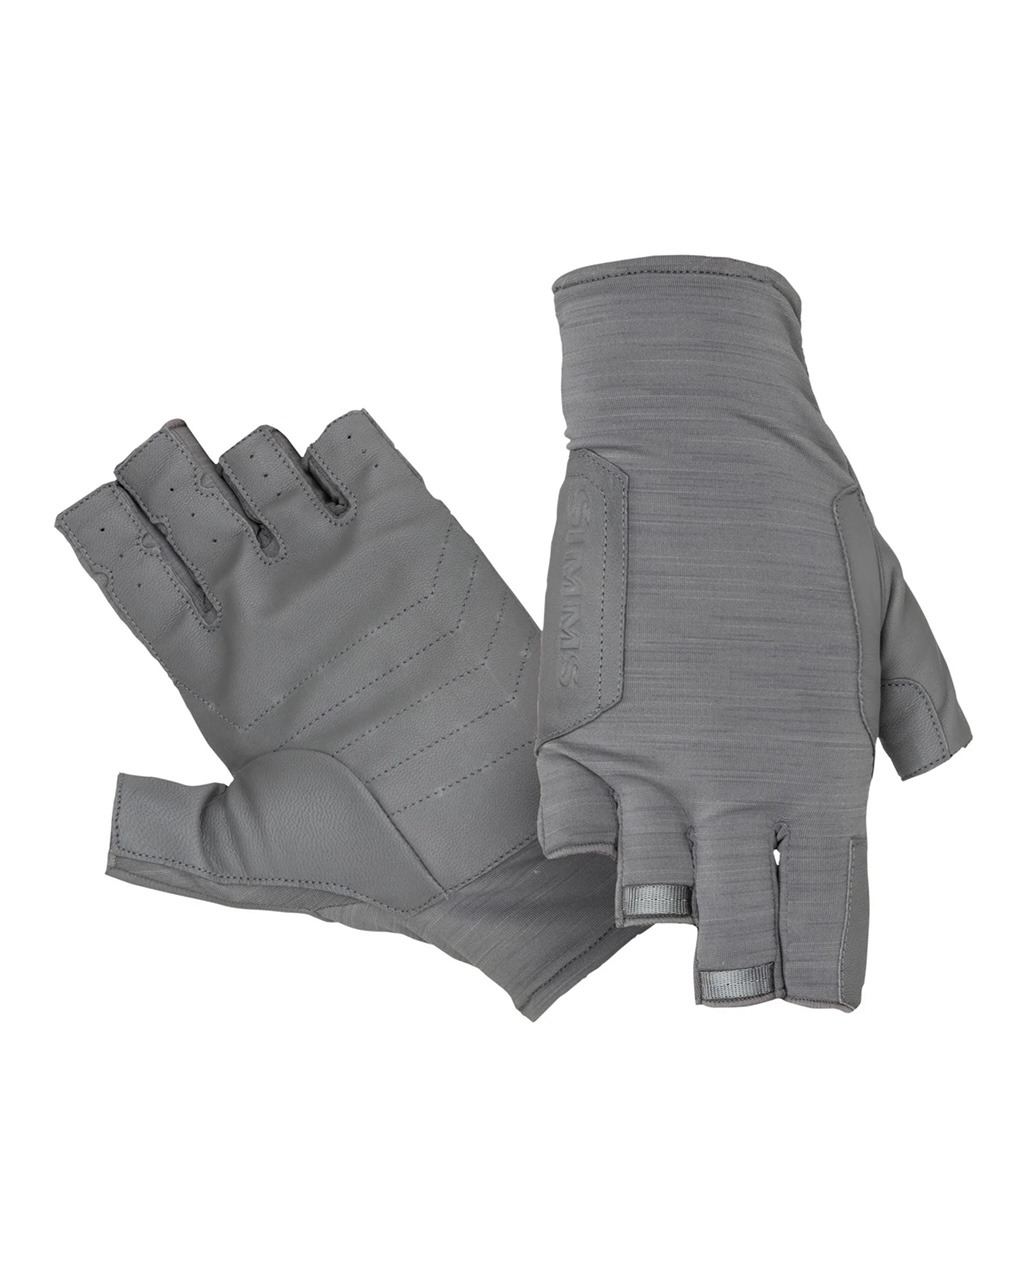 Simms Solarflex Guide Glove - Flow Camo - XL